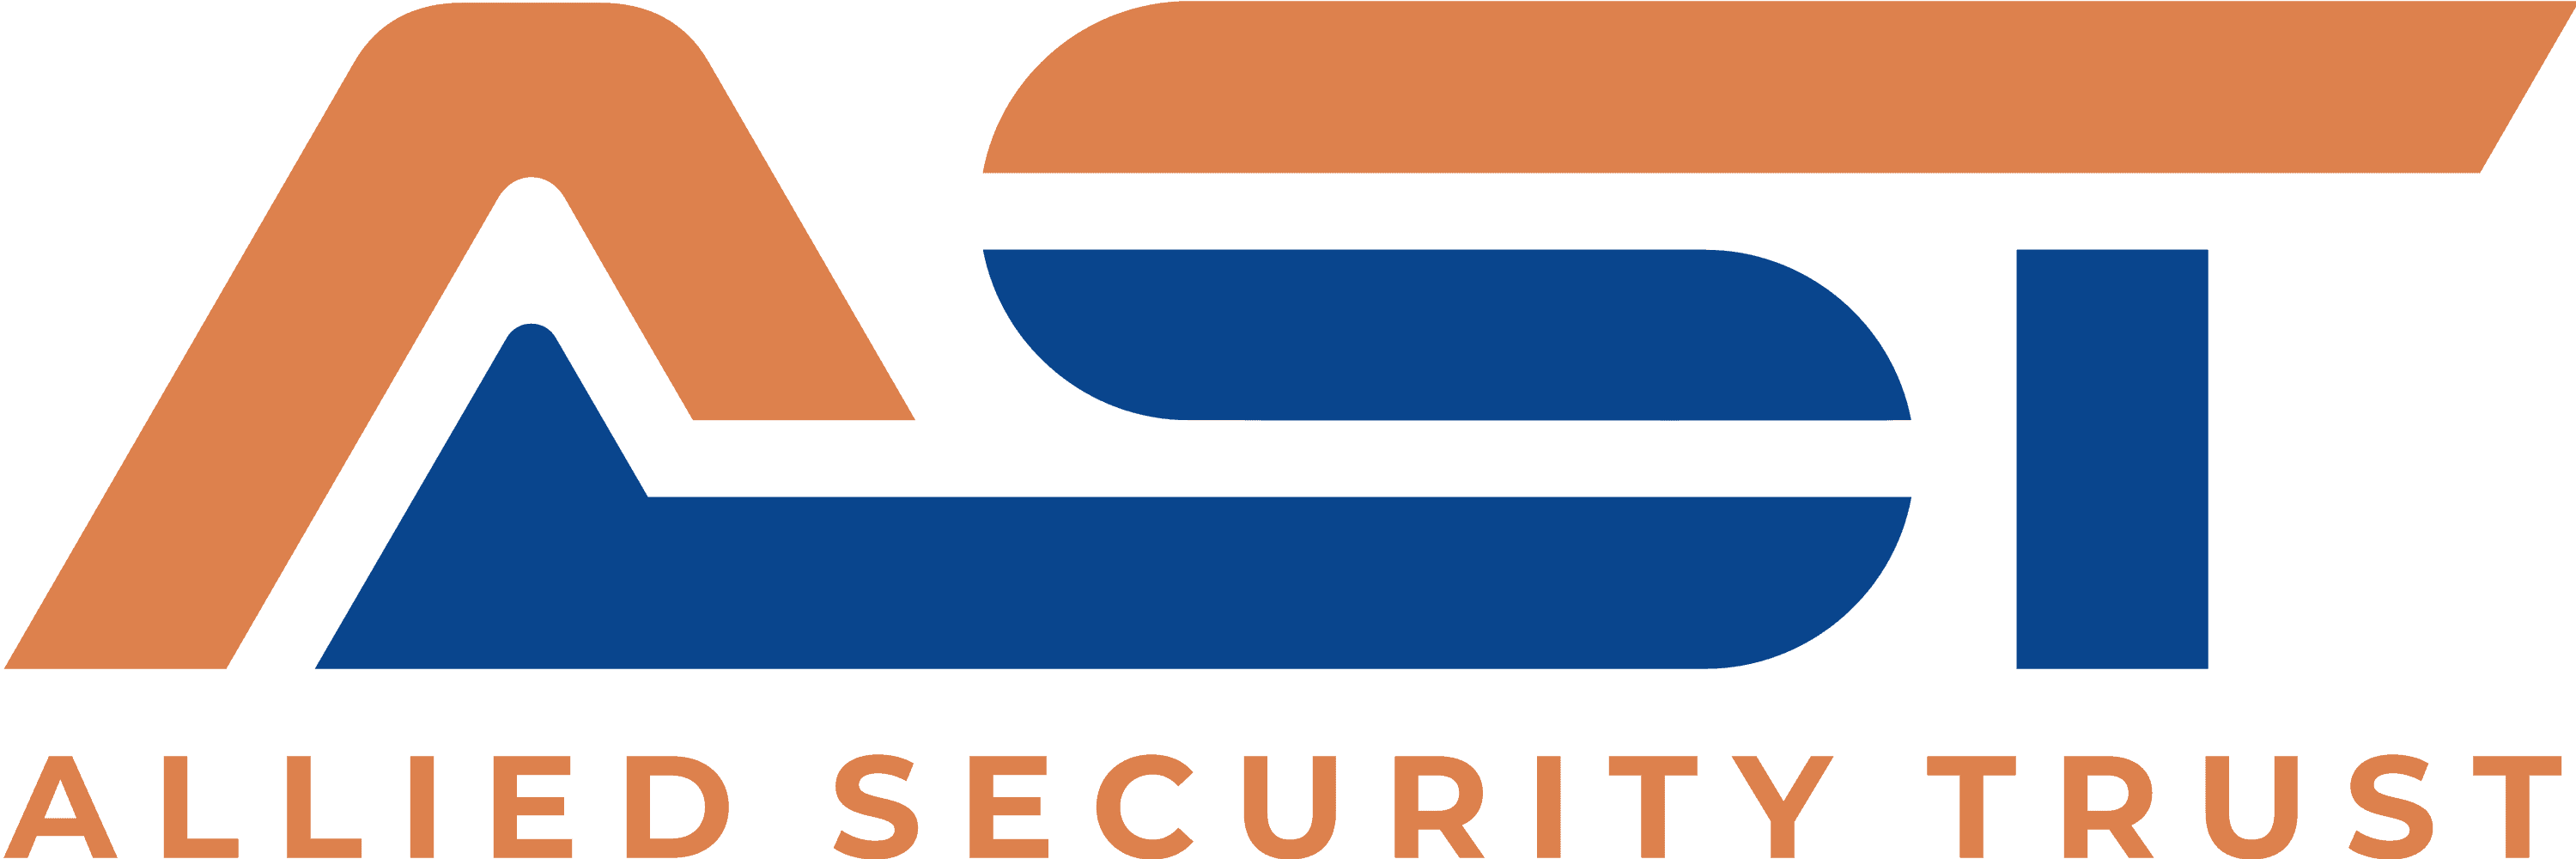 Sponsor logo - Allied Security Trust